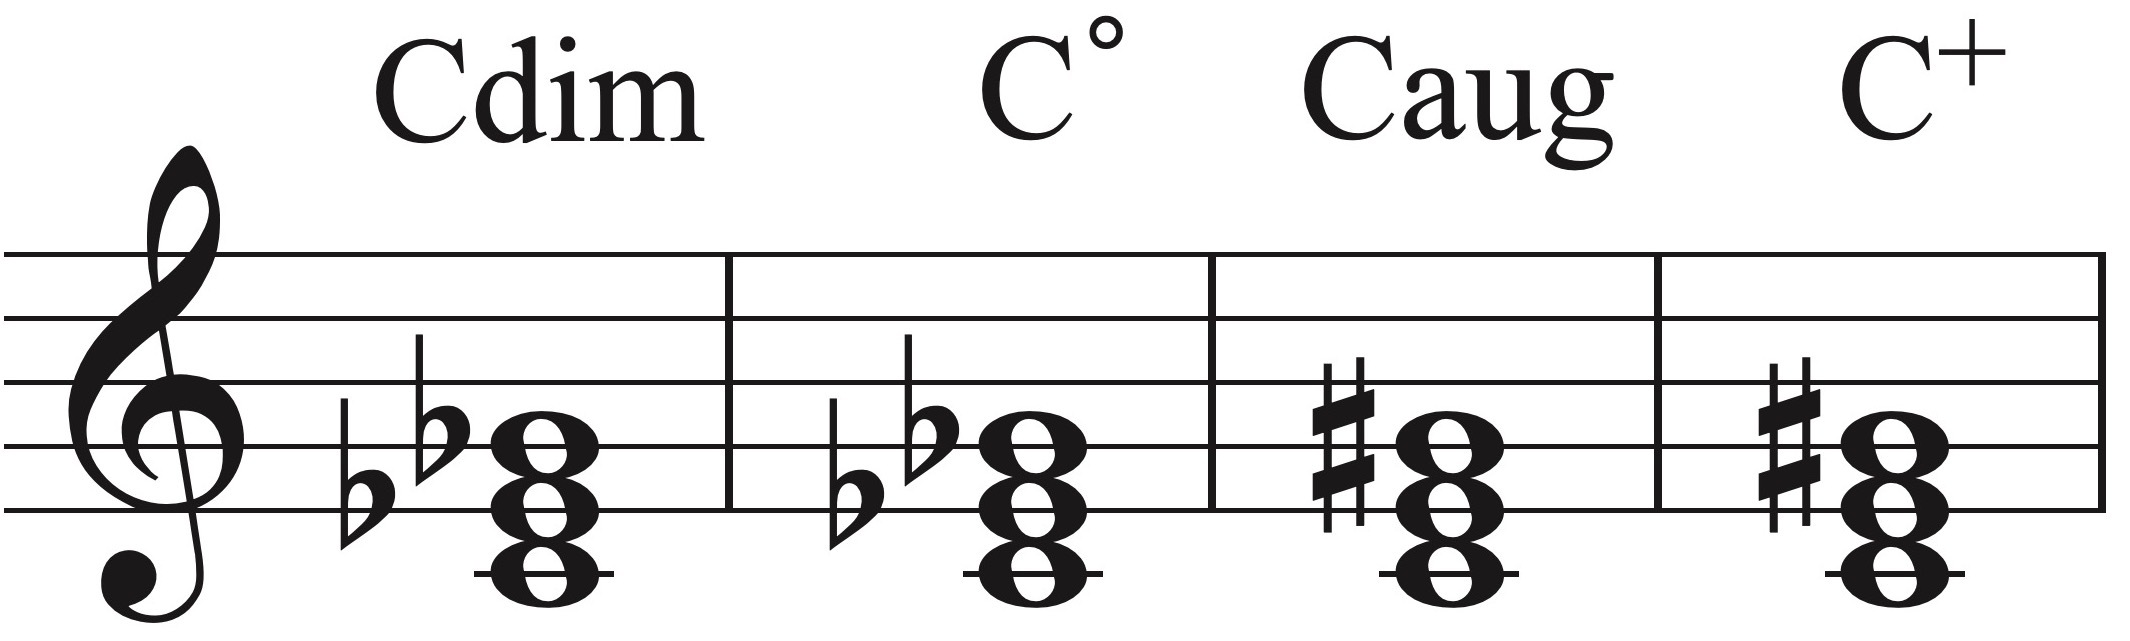 guitar chords symbols